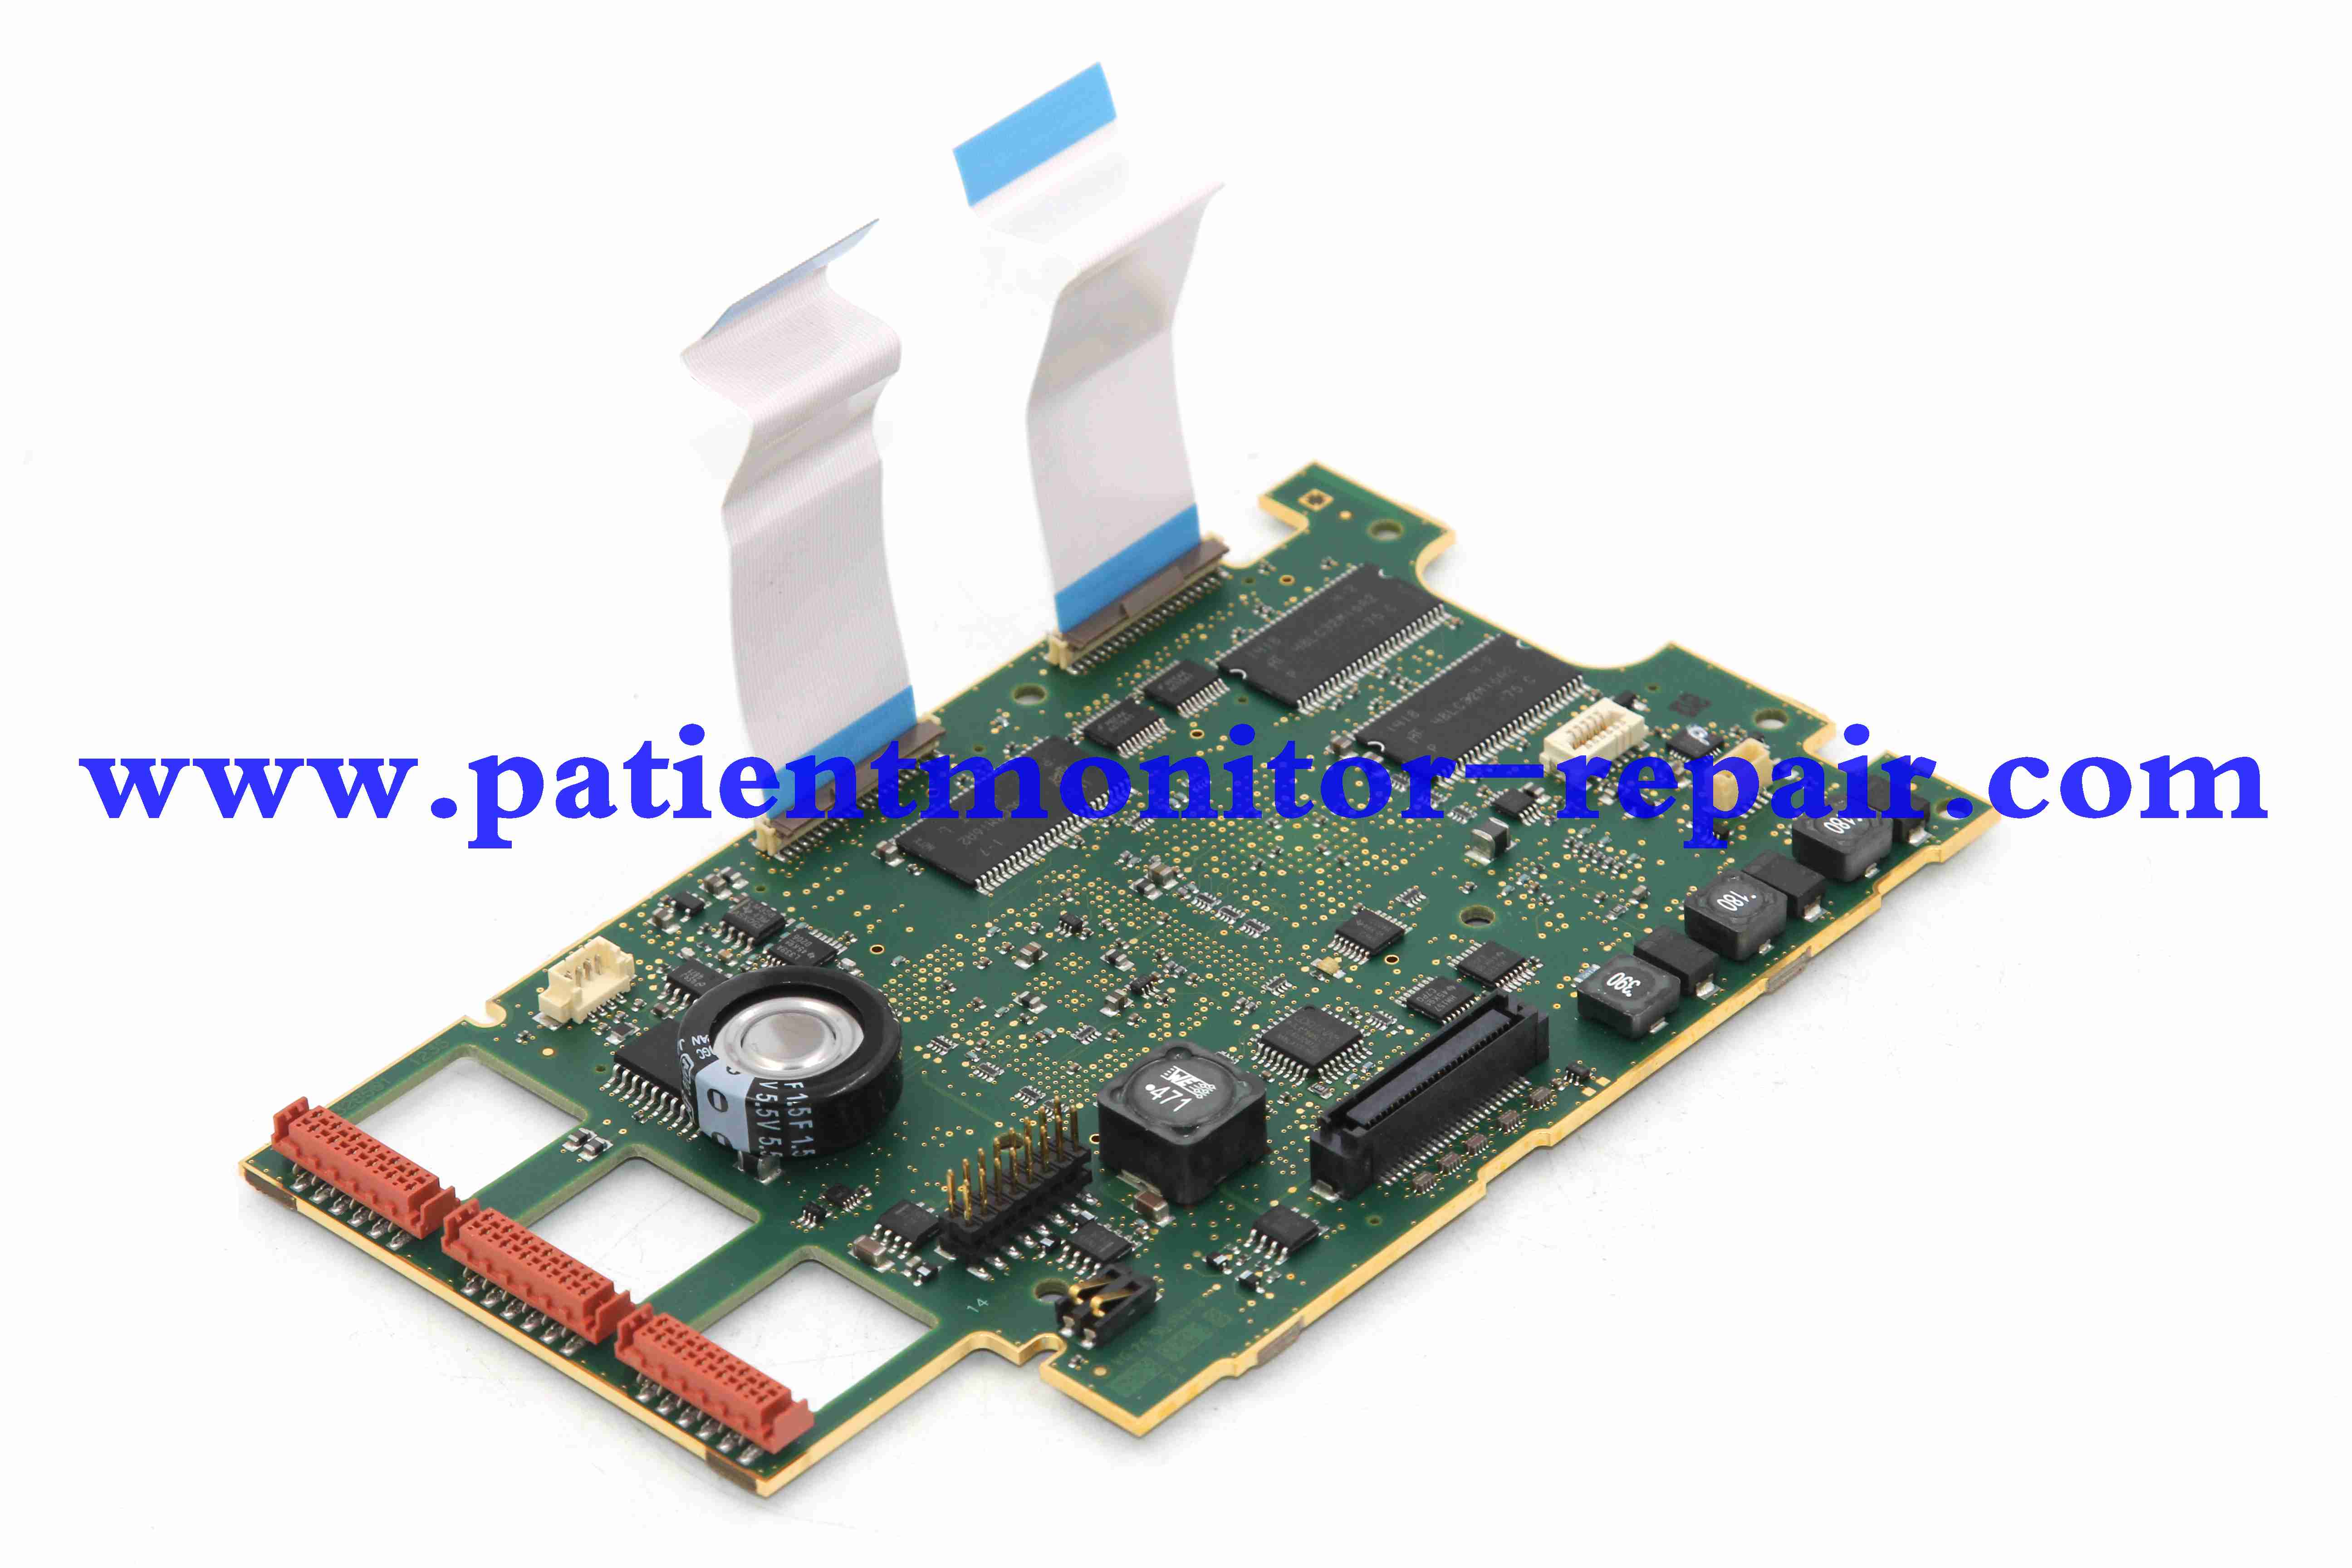  IntelliVue X2 patient monitor mainboard 453564328491